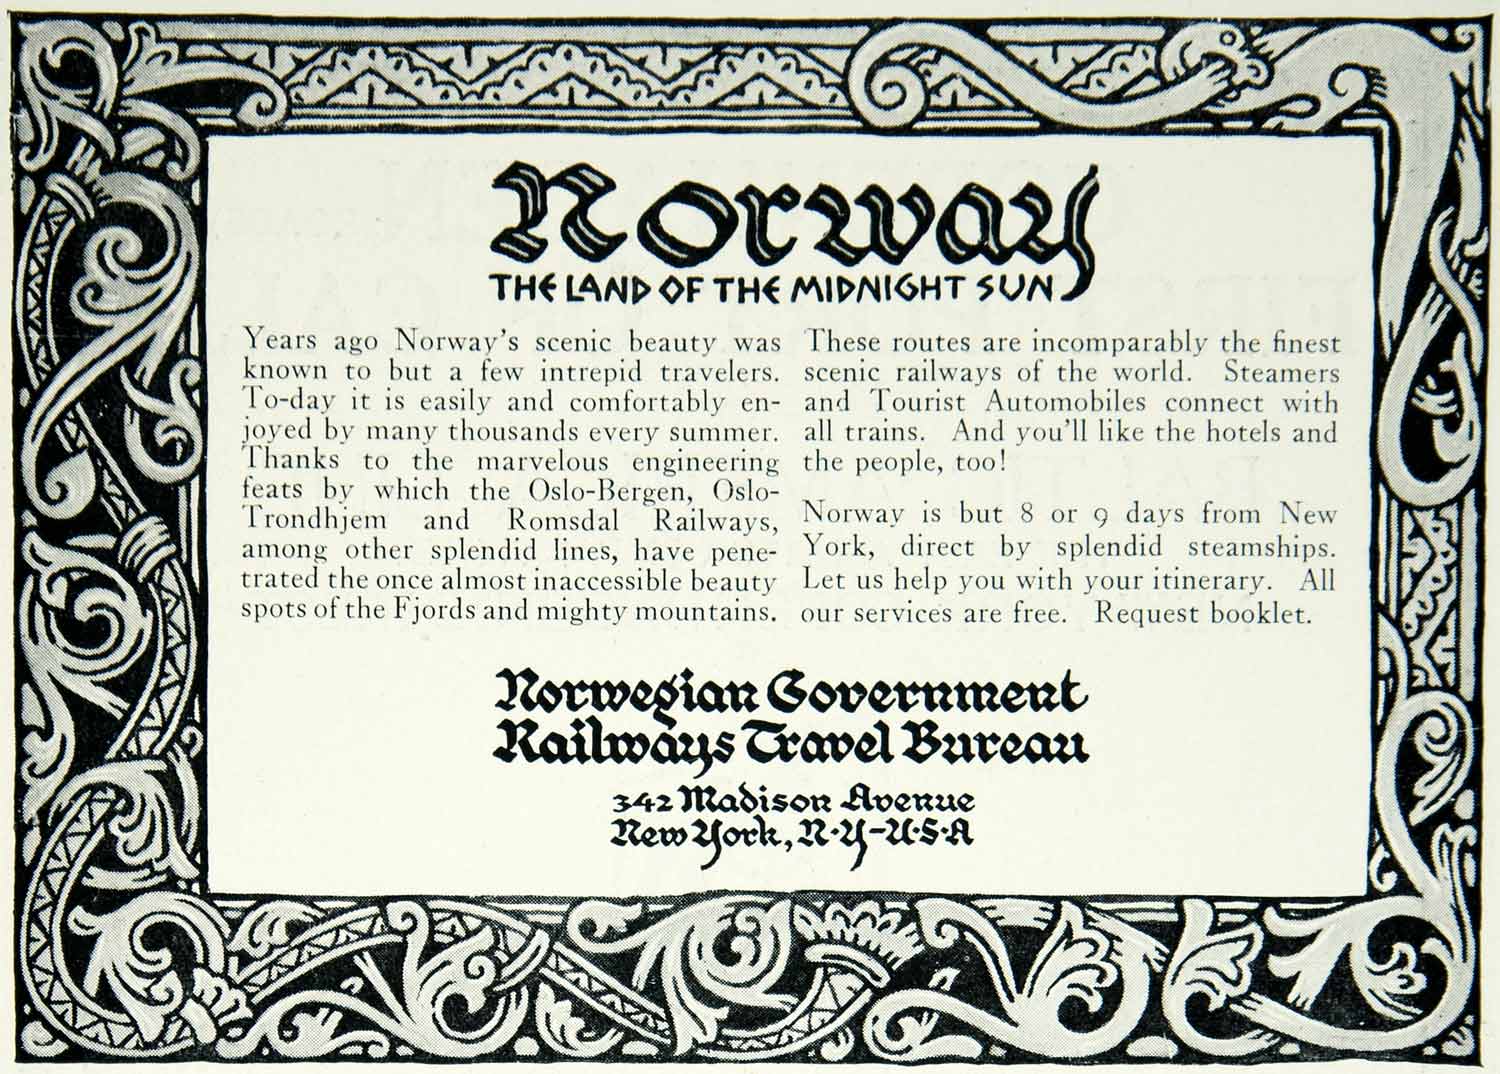 1927 Ad Norwegian Government Railways Travel Bureau 342 Madison Ave NYC YASR1